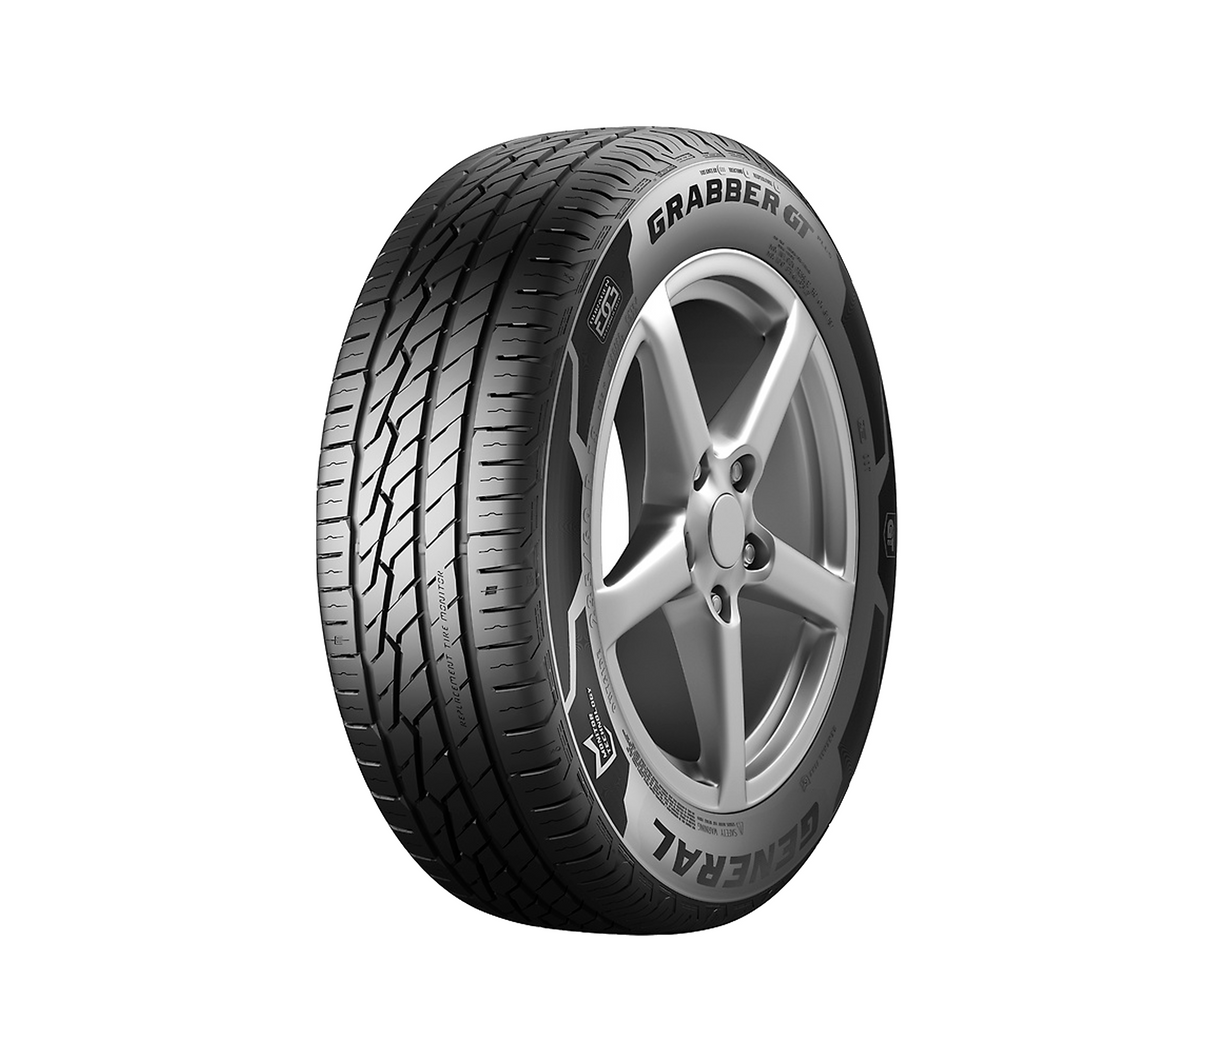 Neumático 235/60R17 102V Grabber Gt Plus General Tire